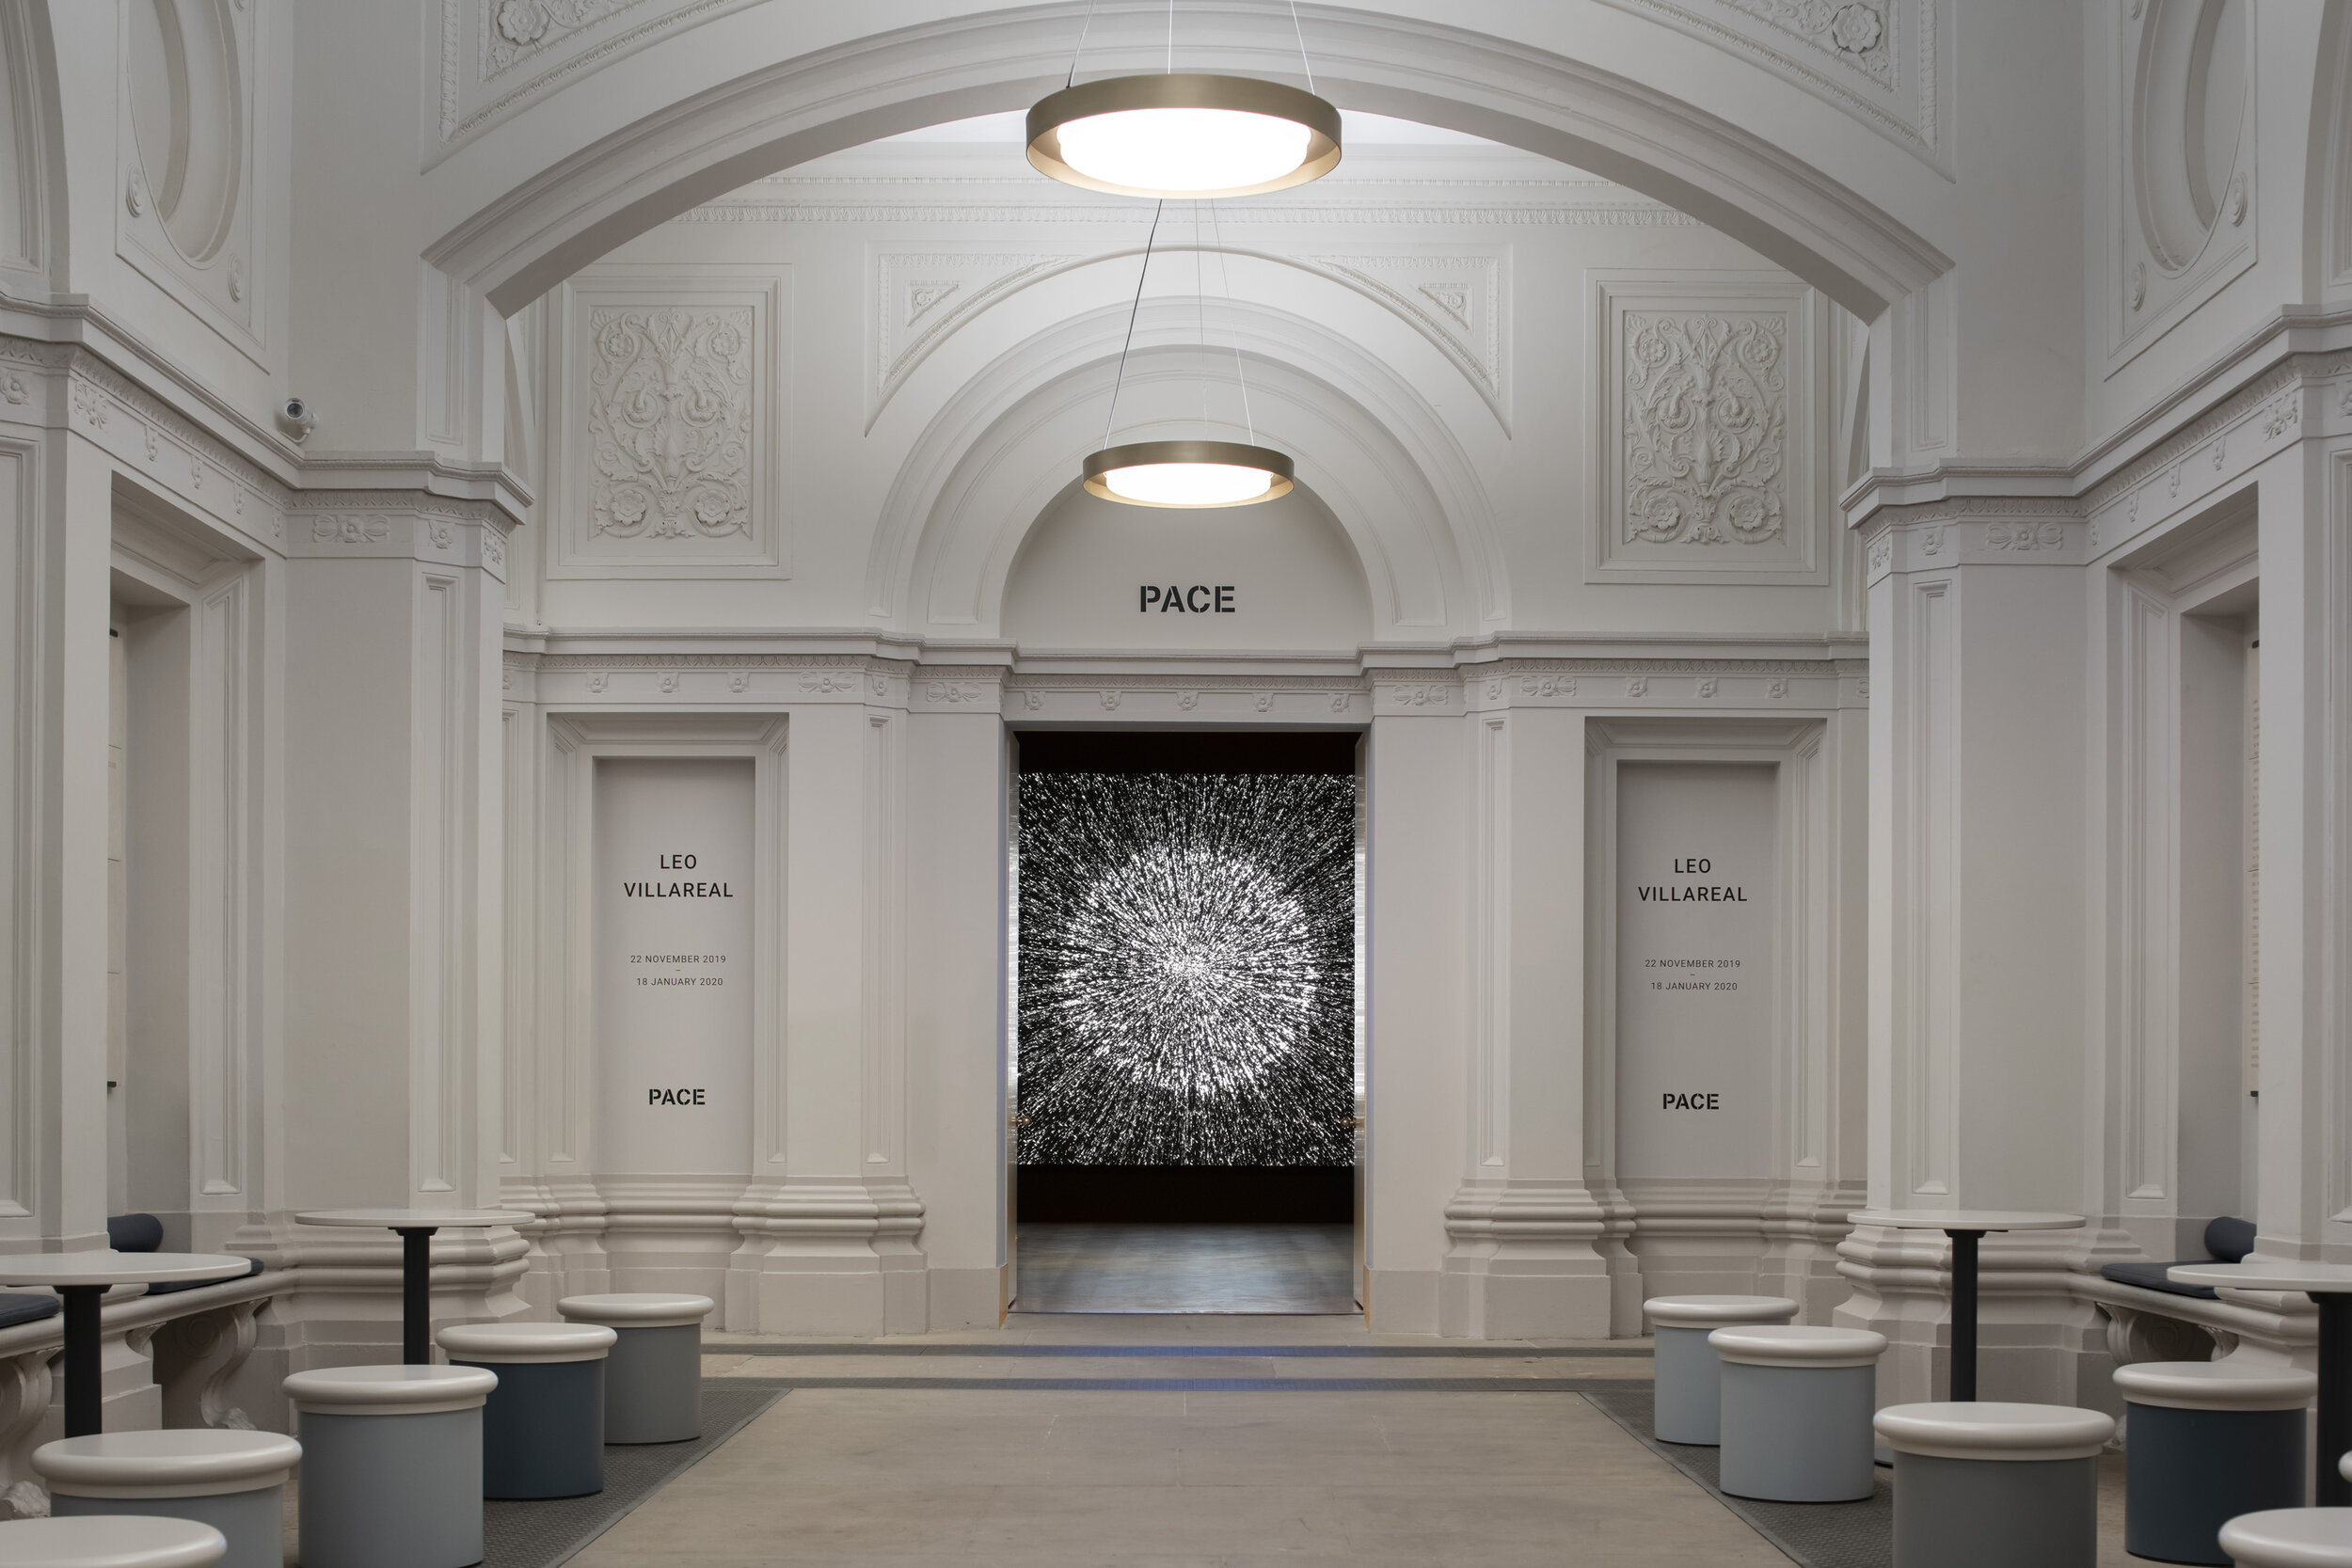 Leo Villareal, 2020, Pace Gallery, London, UK